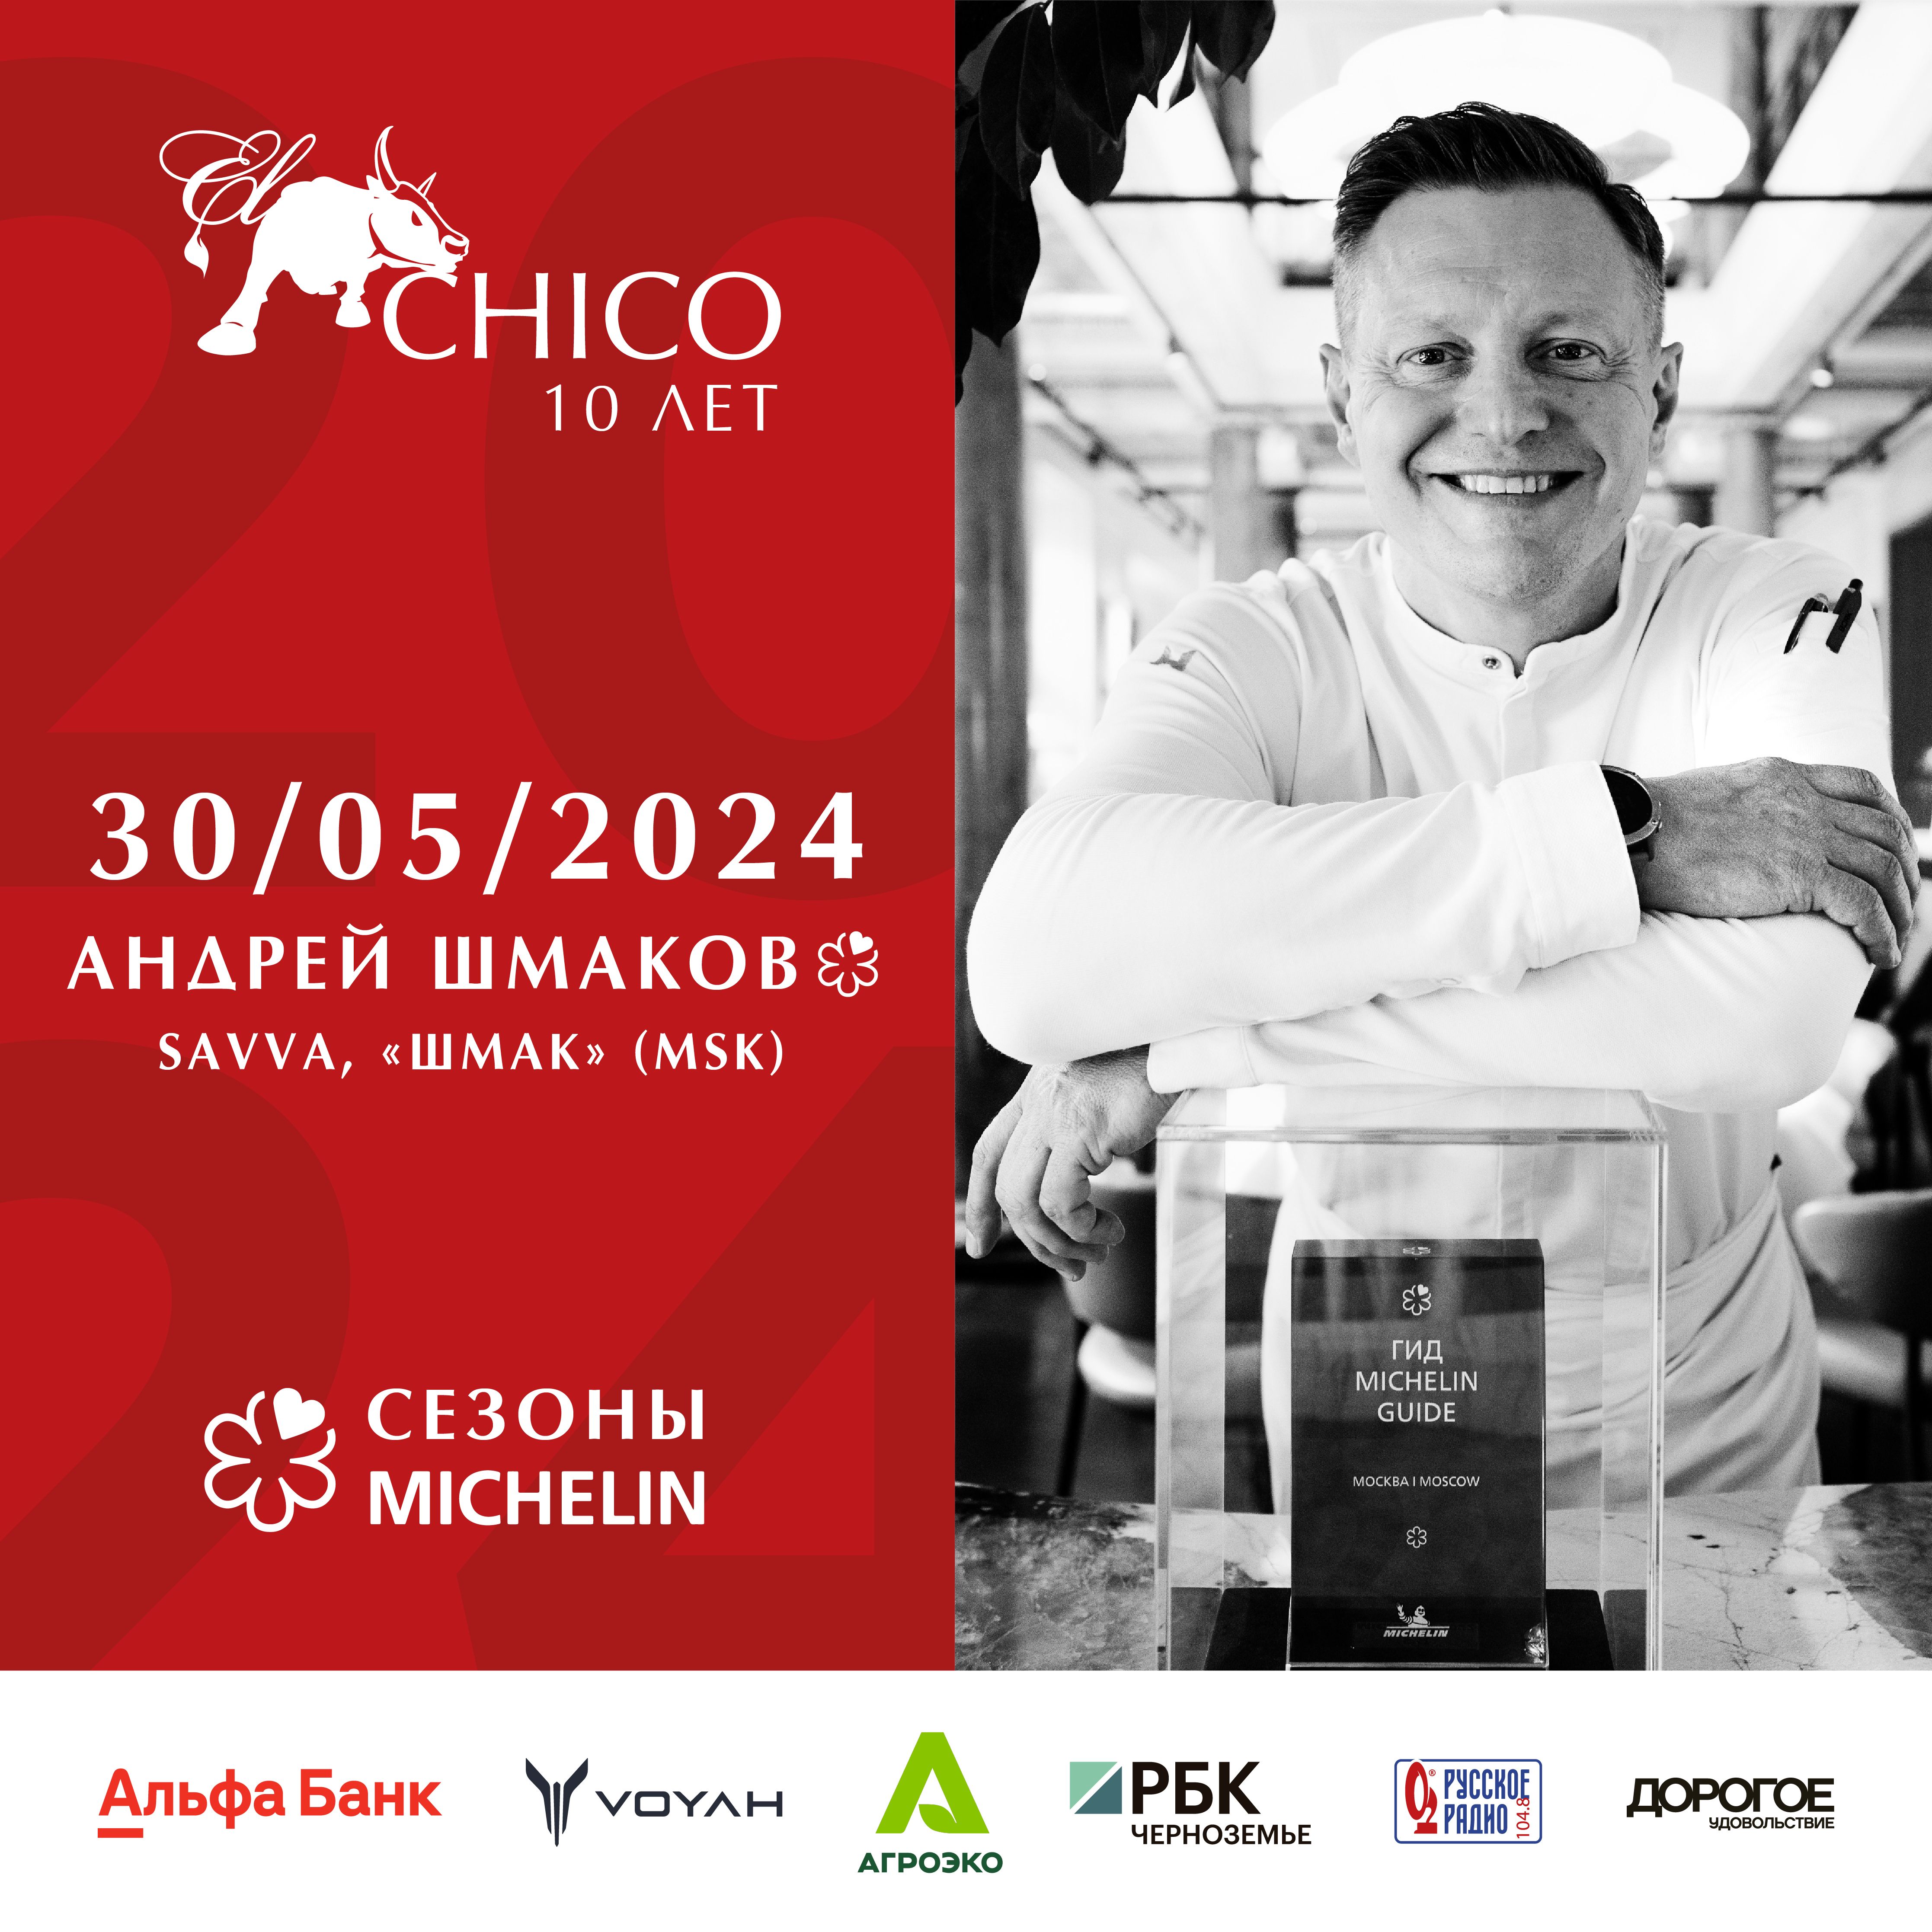 Шеф-повар Алексей Шмаков в EL CHICO